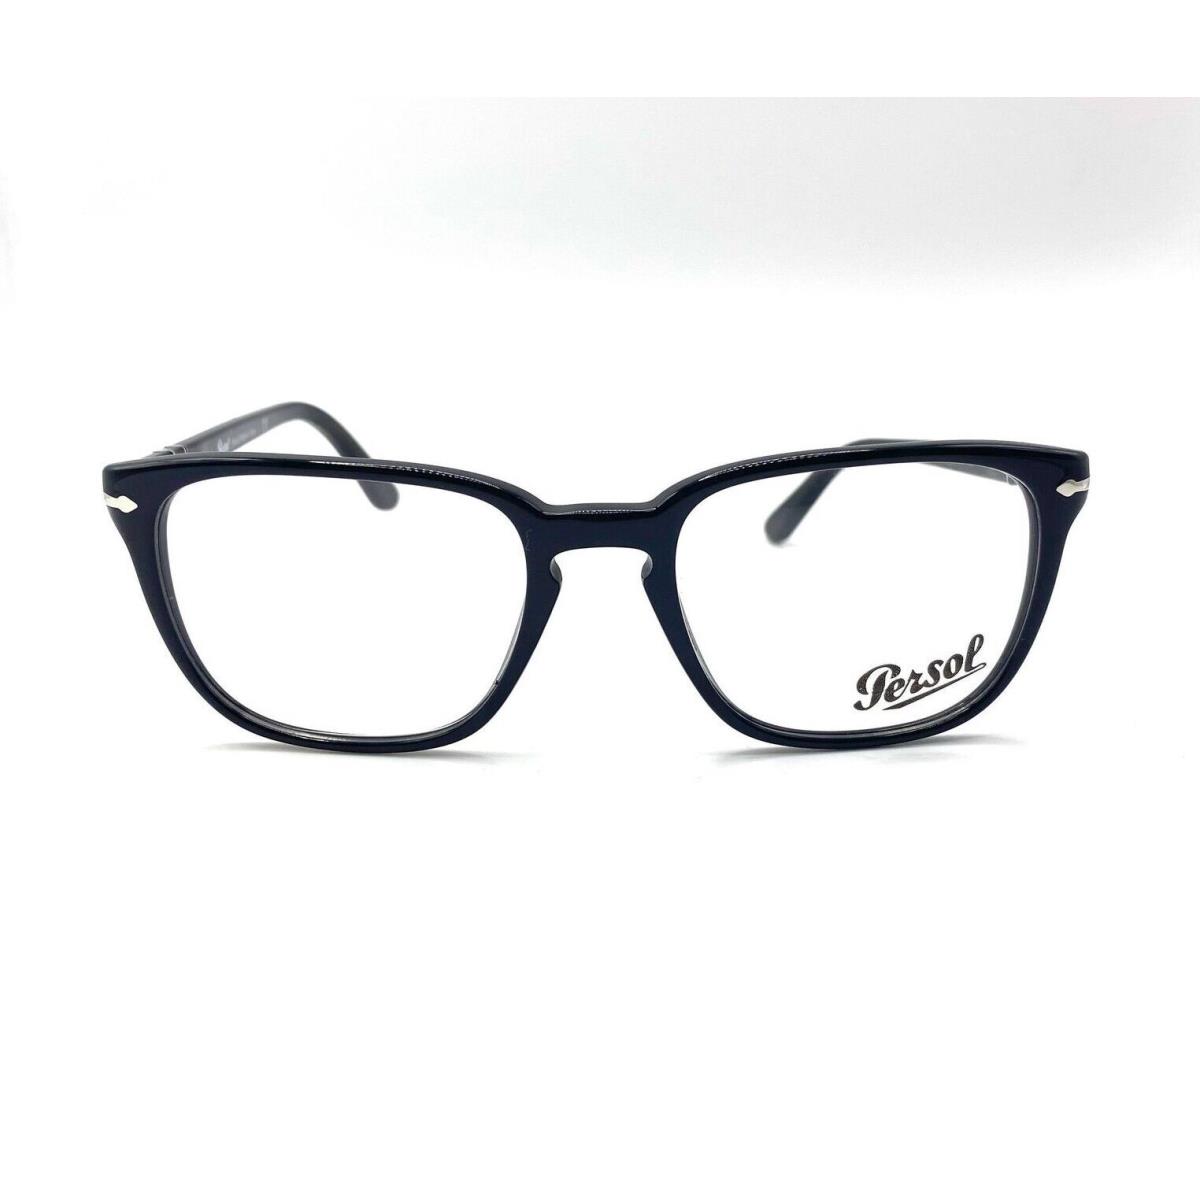 Persol PO3117V Eyeglasses 95 Black with Demo Lens 53mm